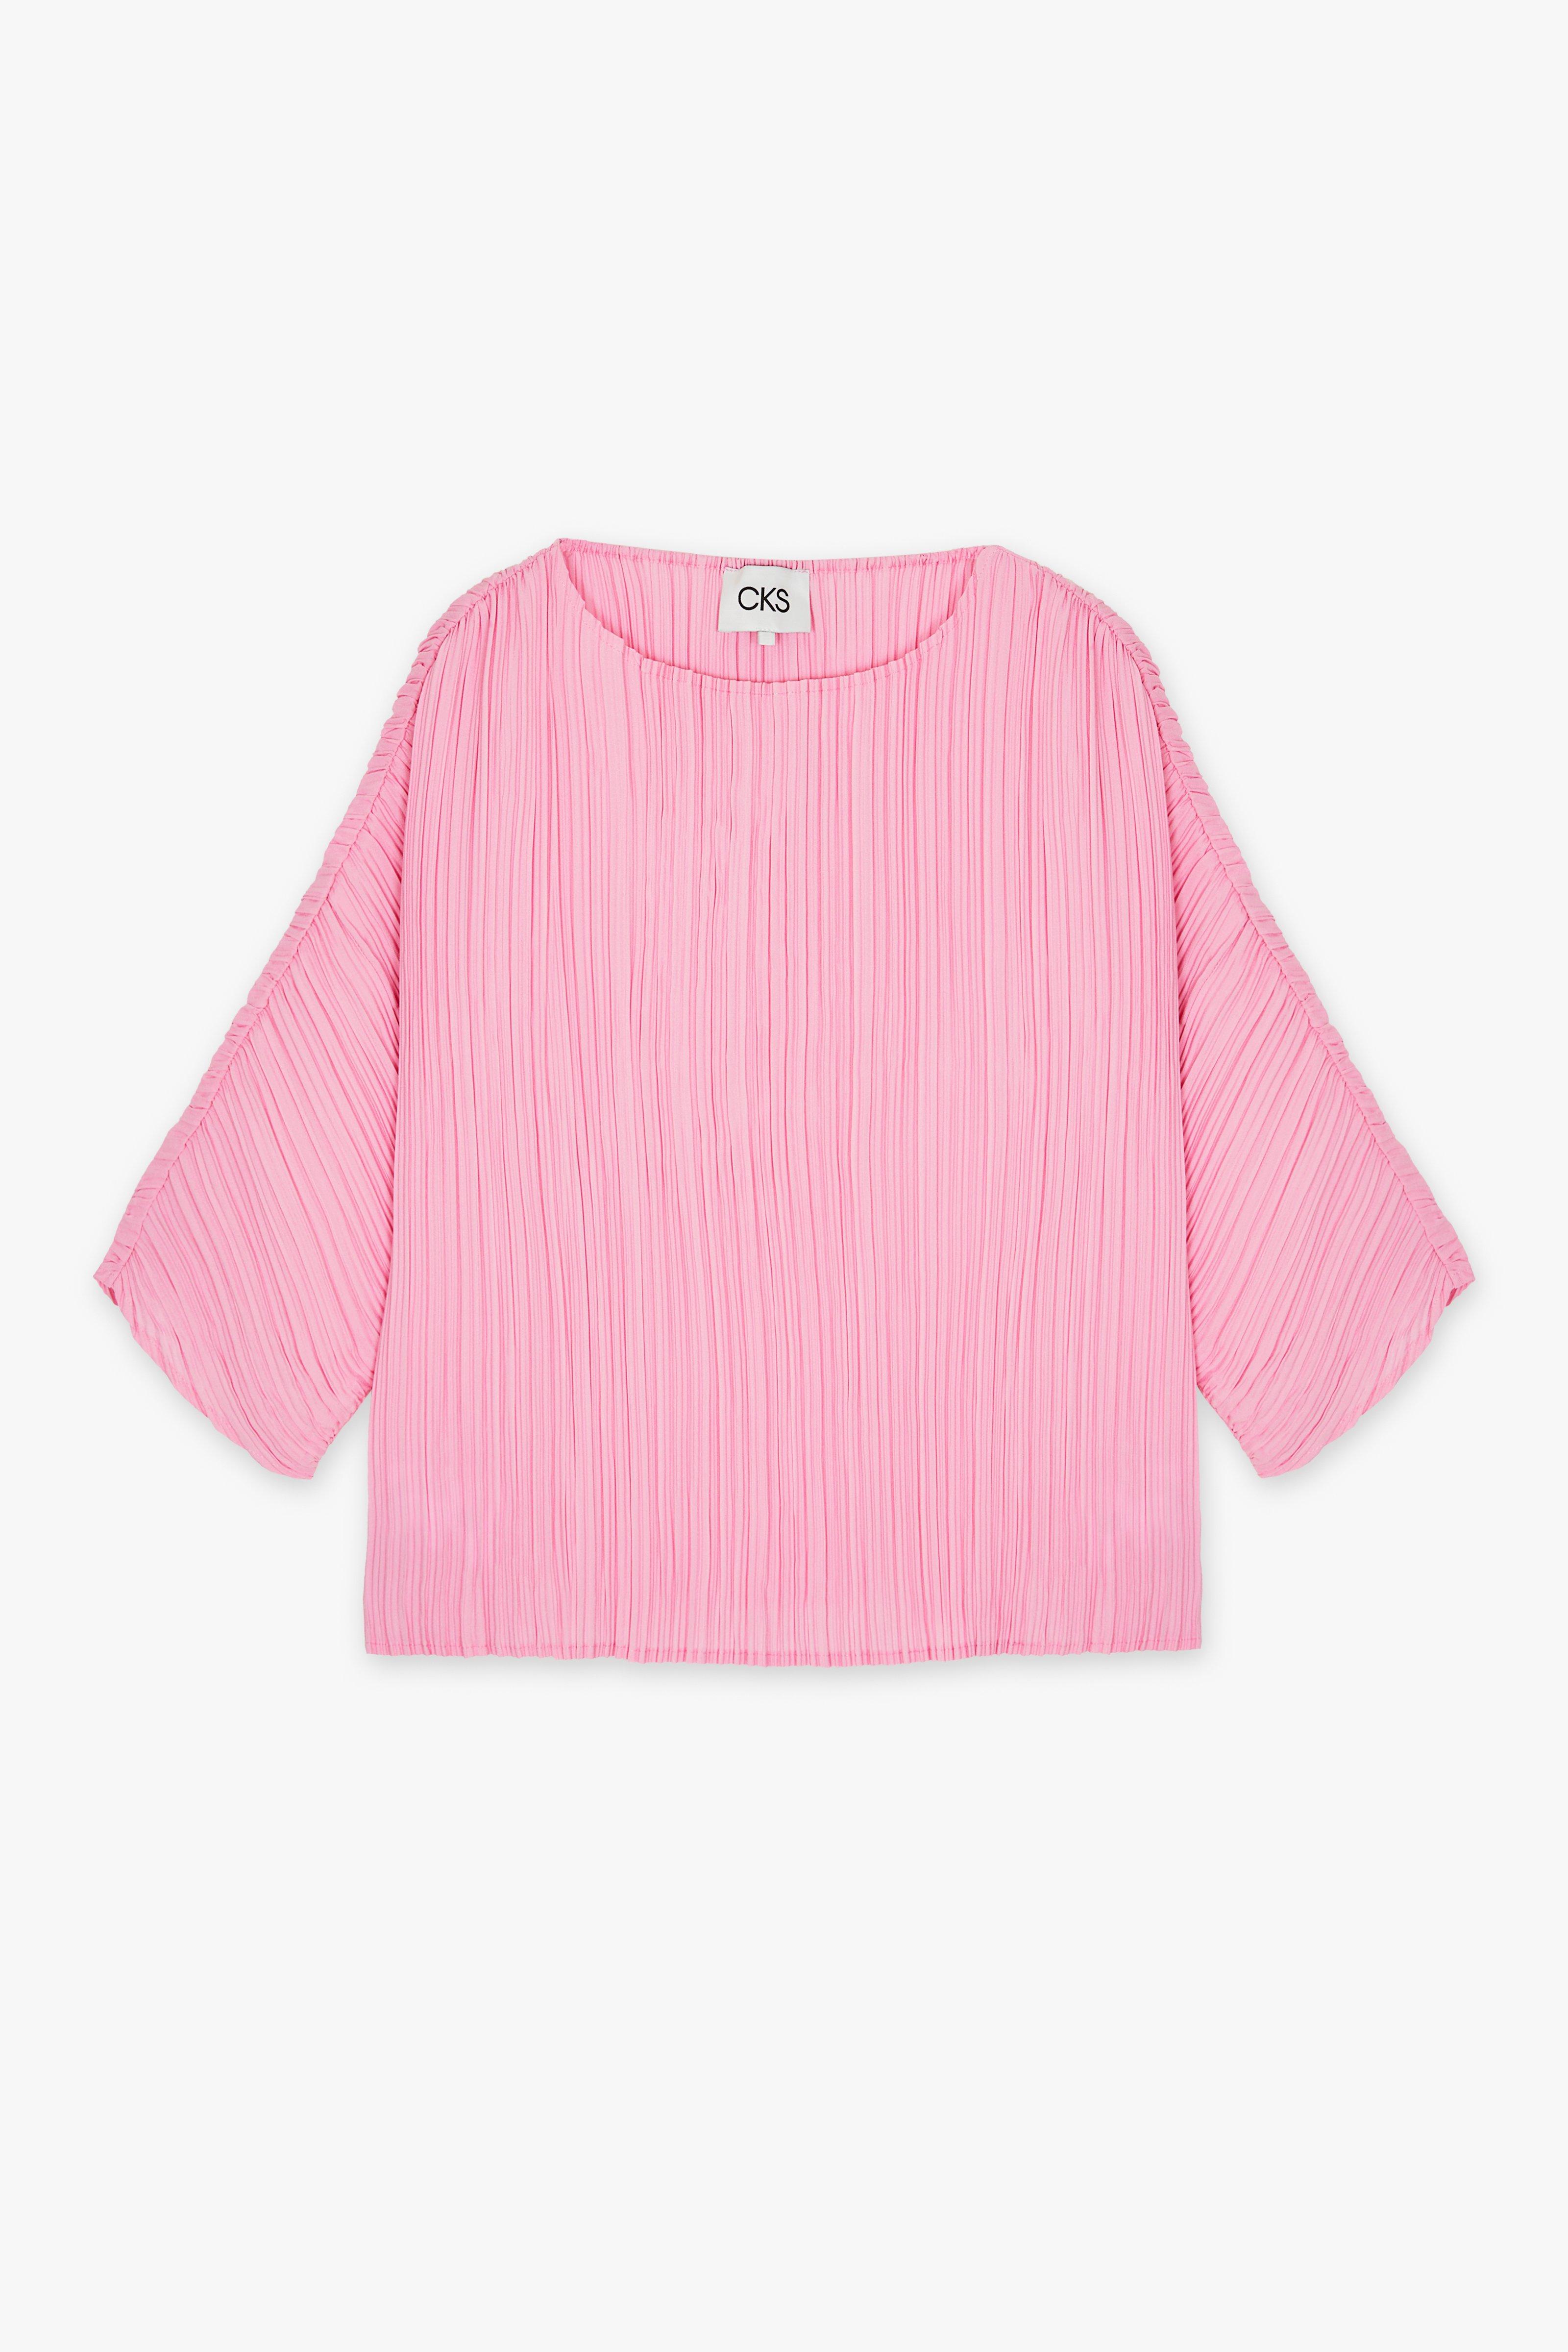 CKS Dames - SENNA - blouse short sleeves - light pink